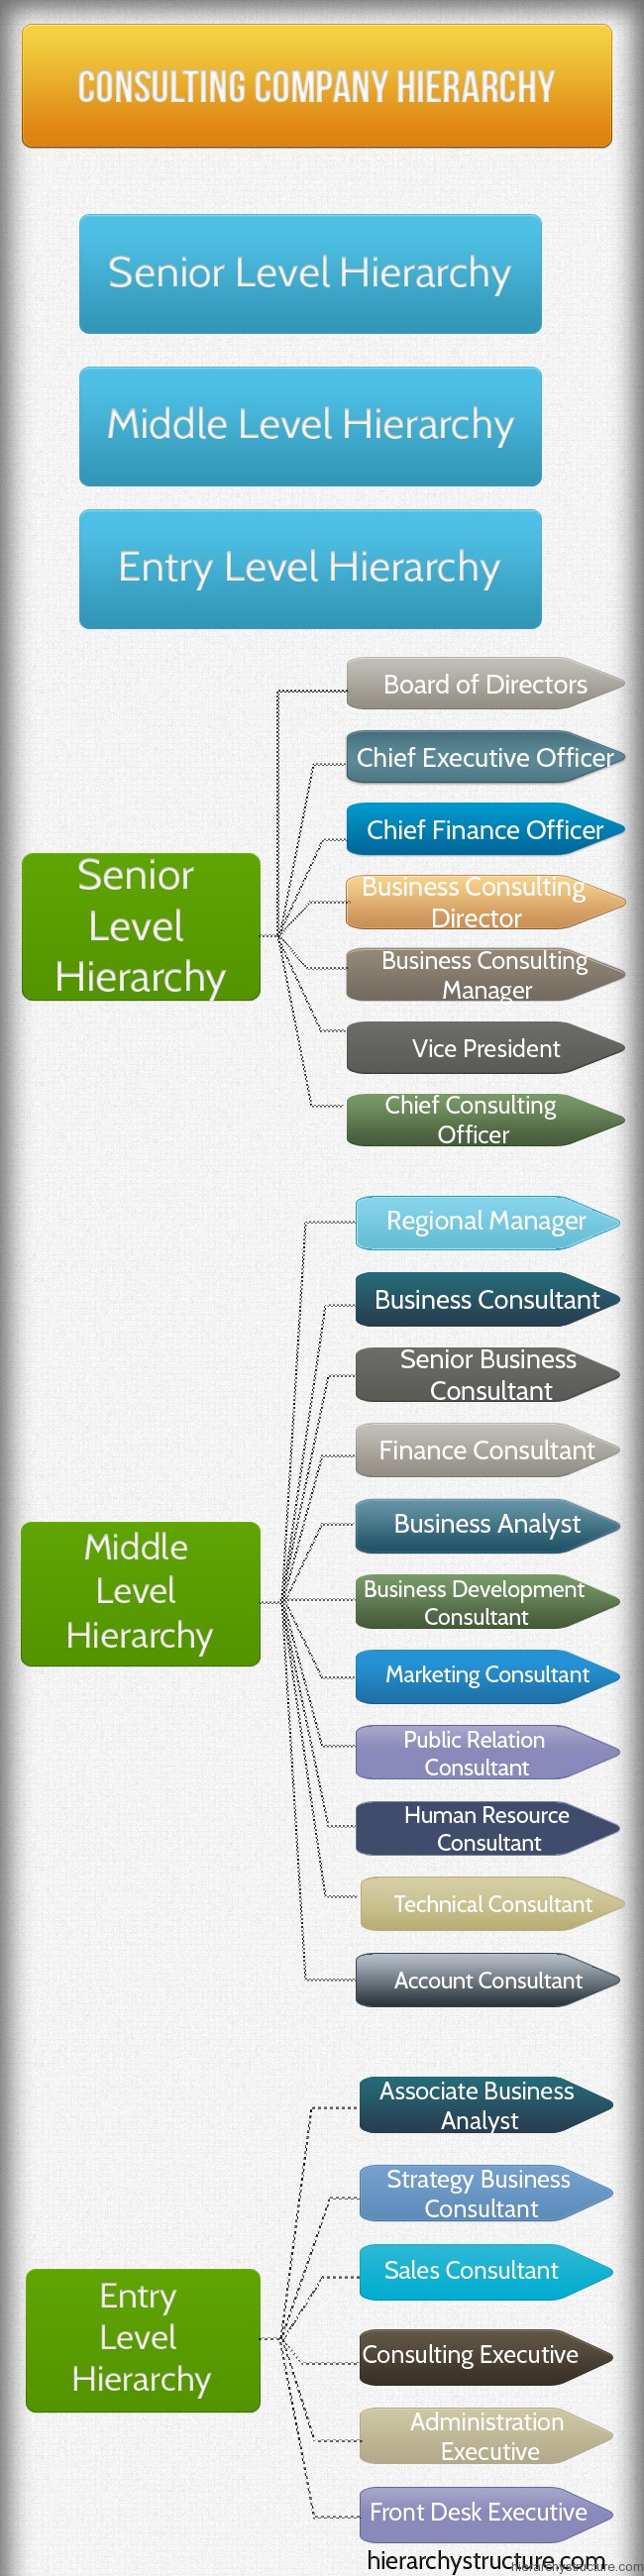 Consulting Company Hierarchy